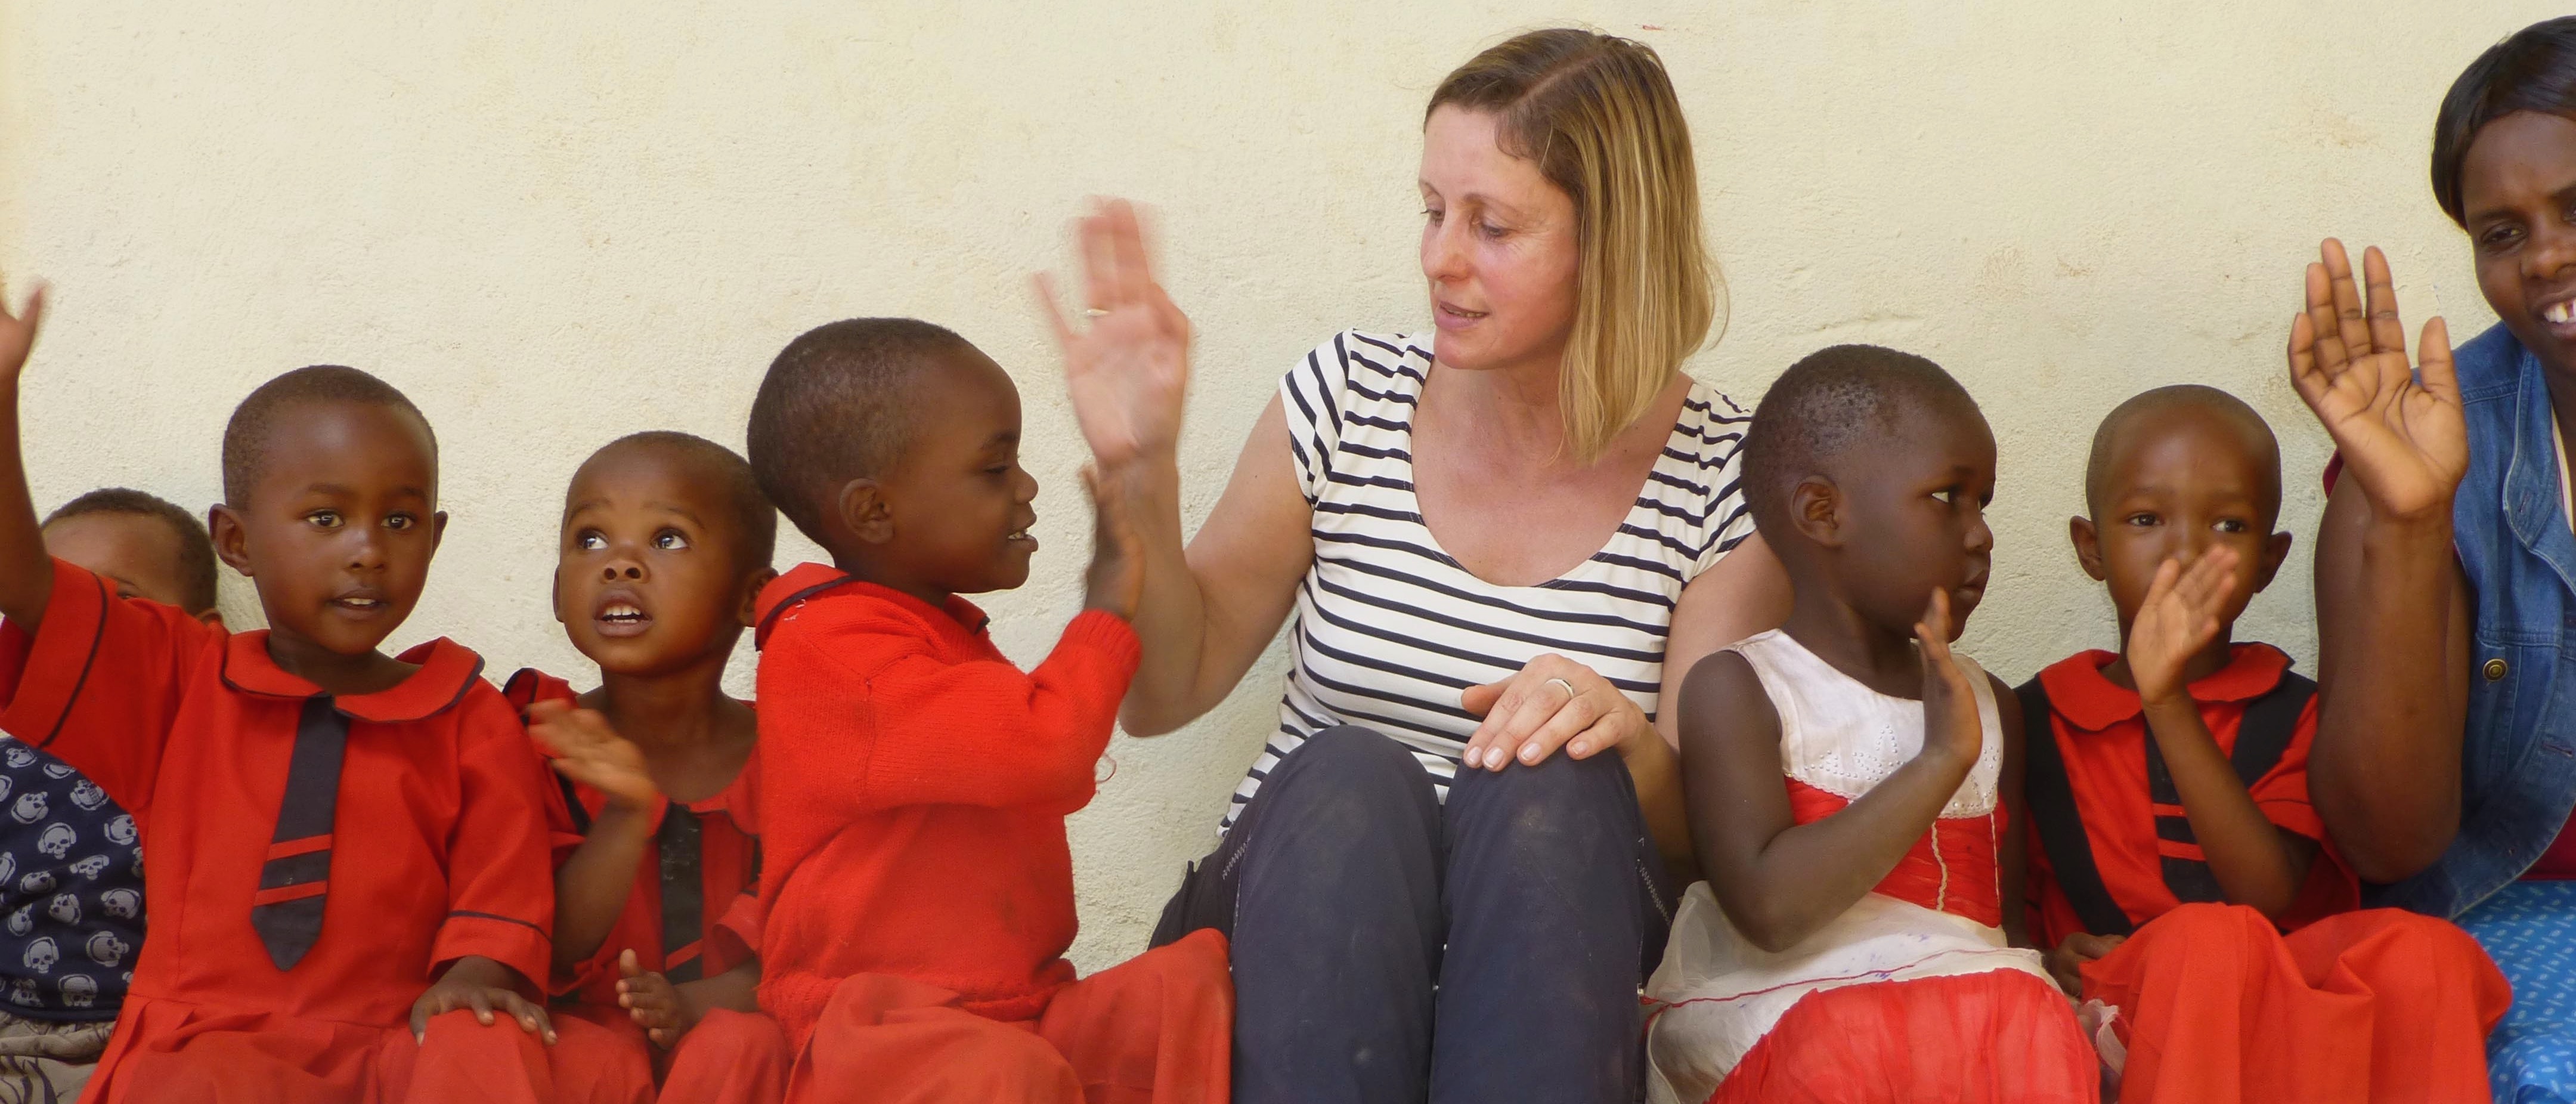 Lionsfreundin Sabine Mau mit Kindergartenkindern in Tansania